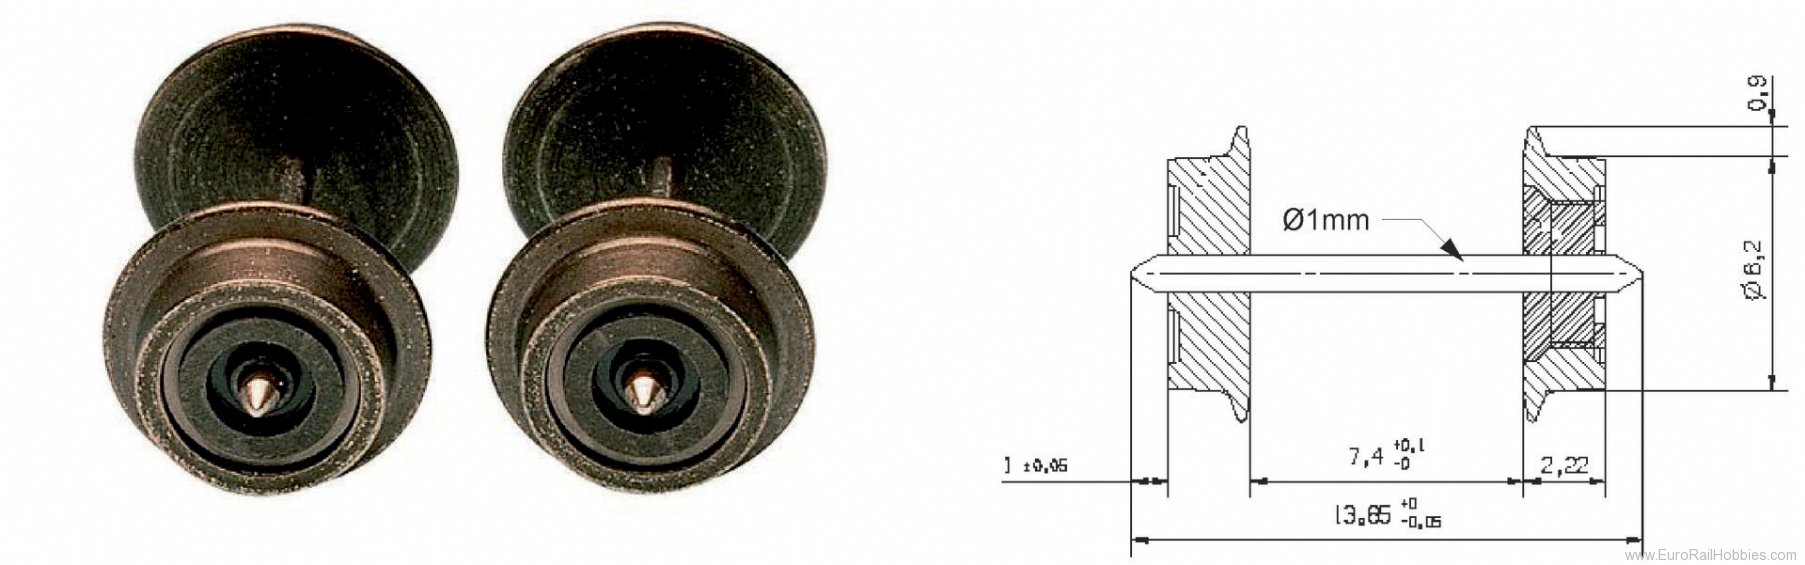 Fleischmann 20023 N gauge wheel sets, 6 mm, isolated on one sid